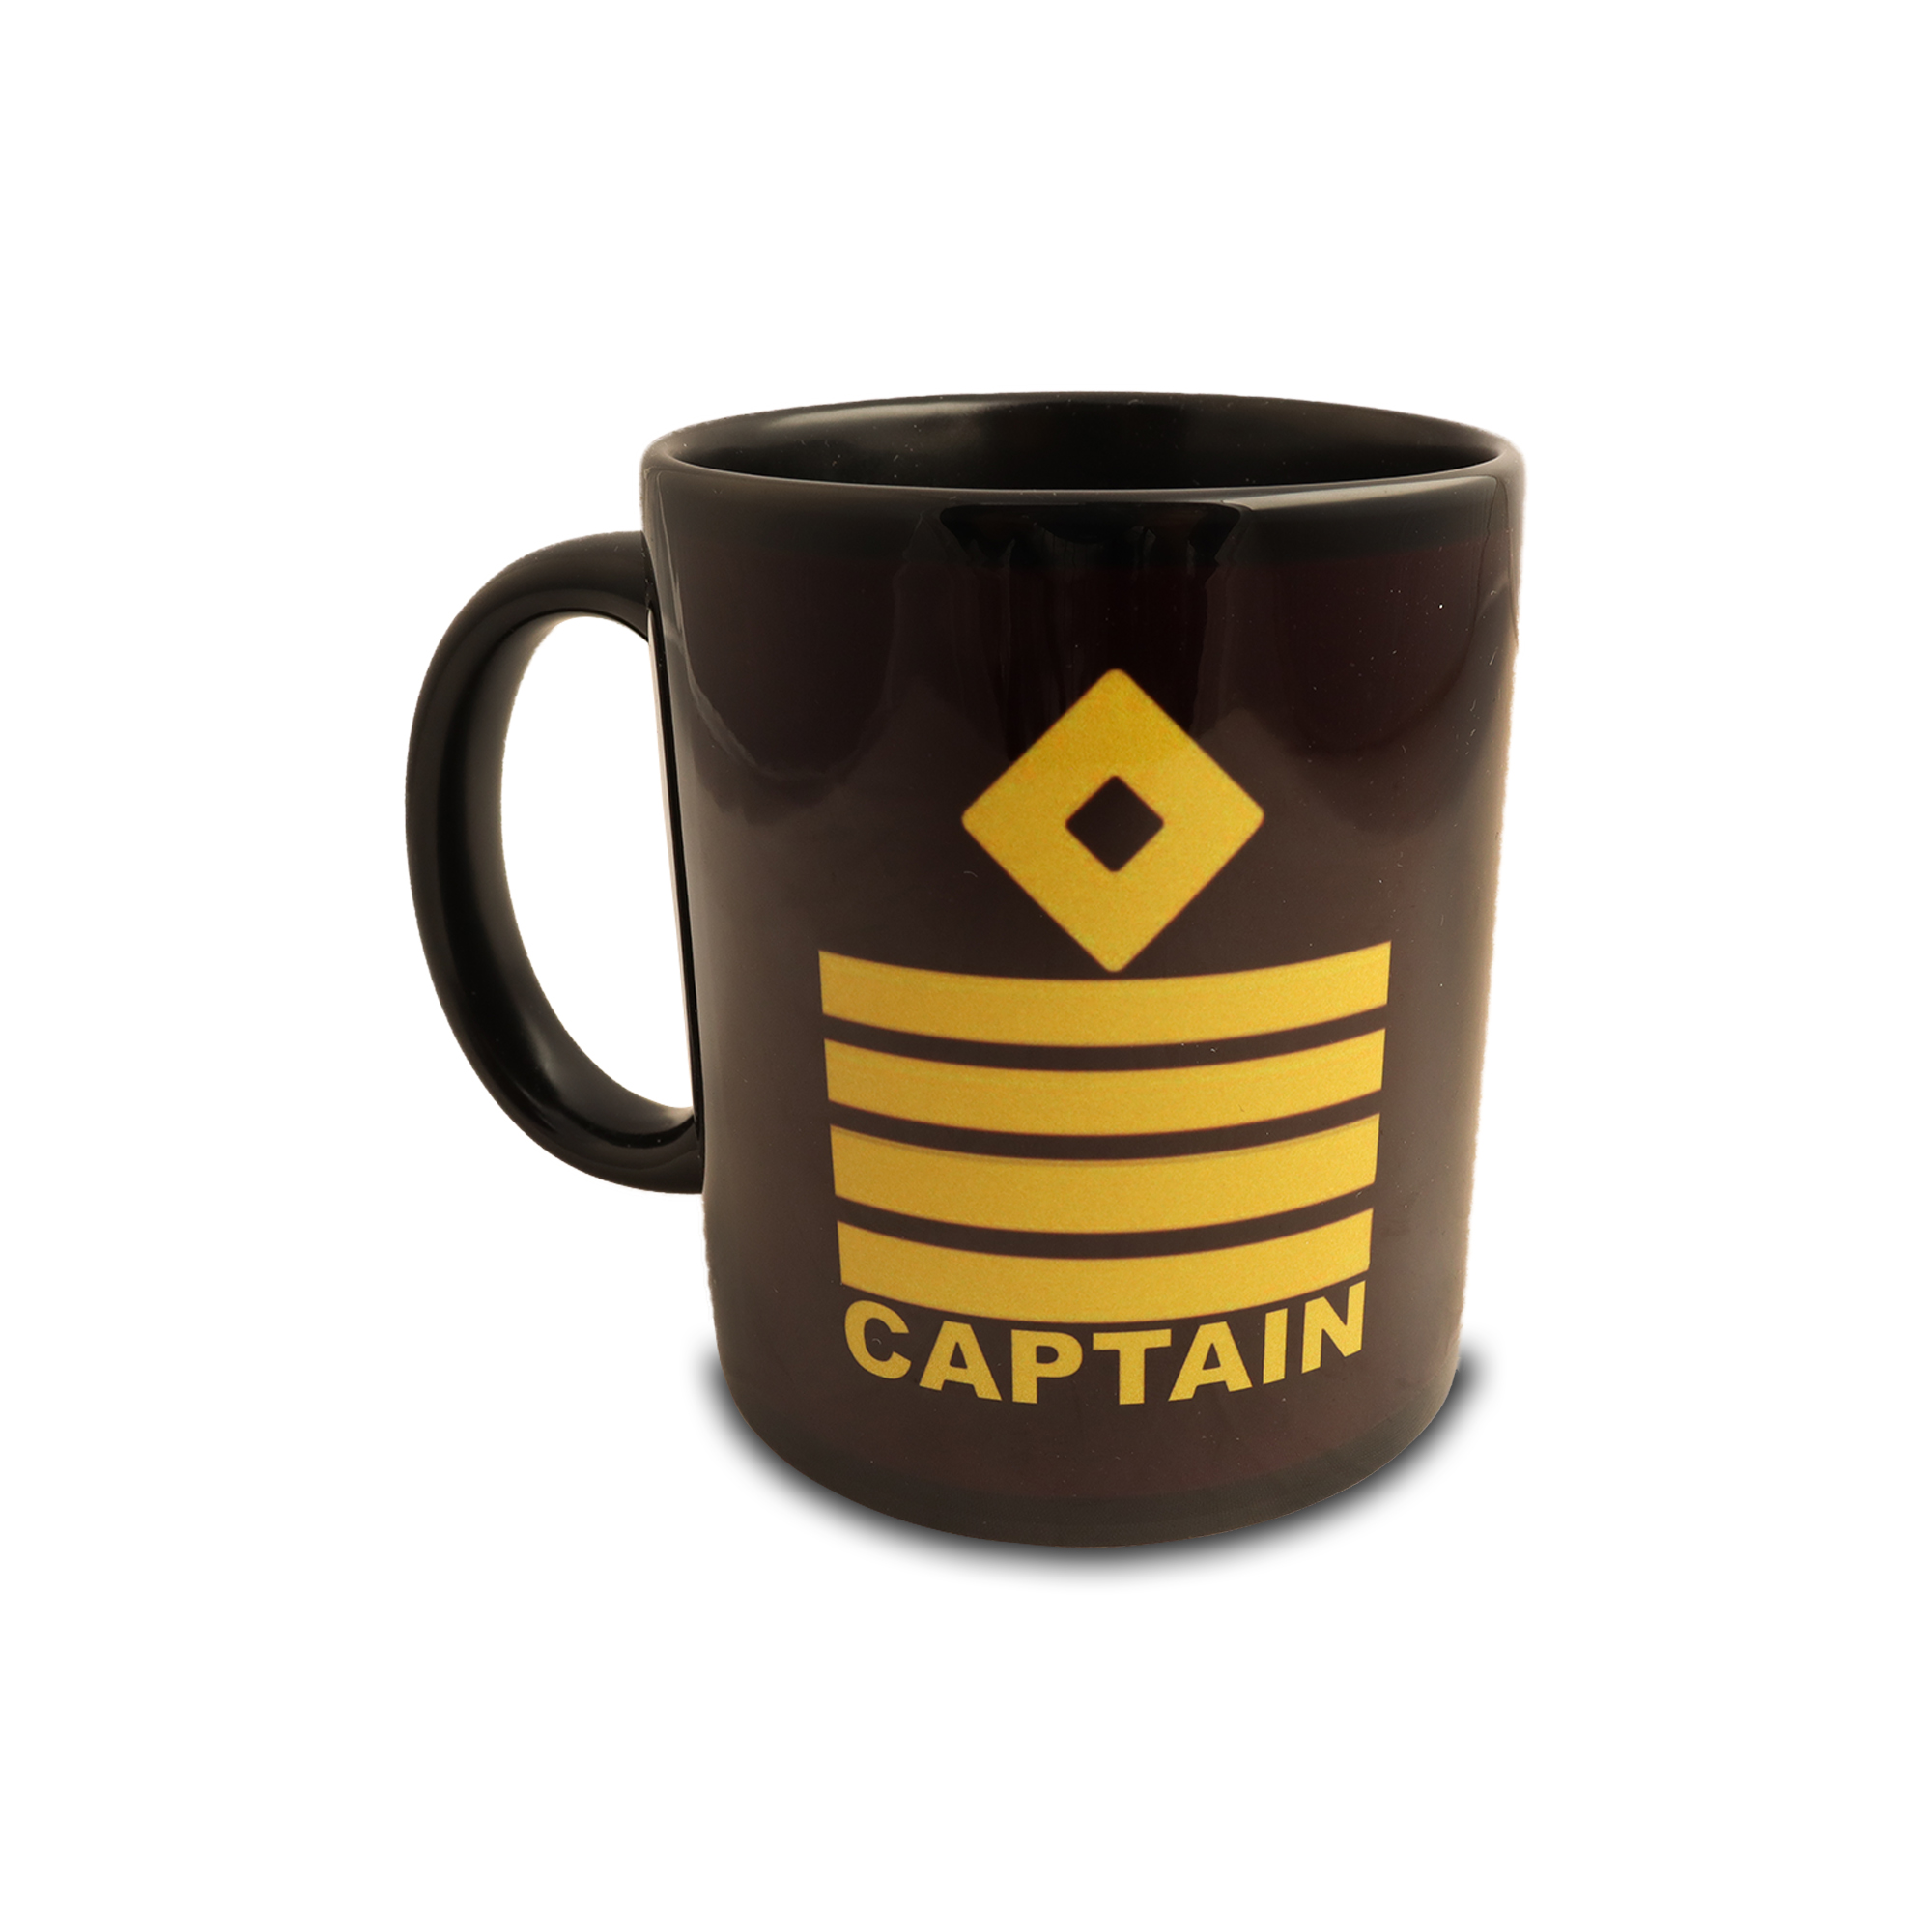 Captain Coffee Mug / Cup